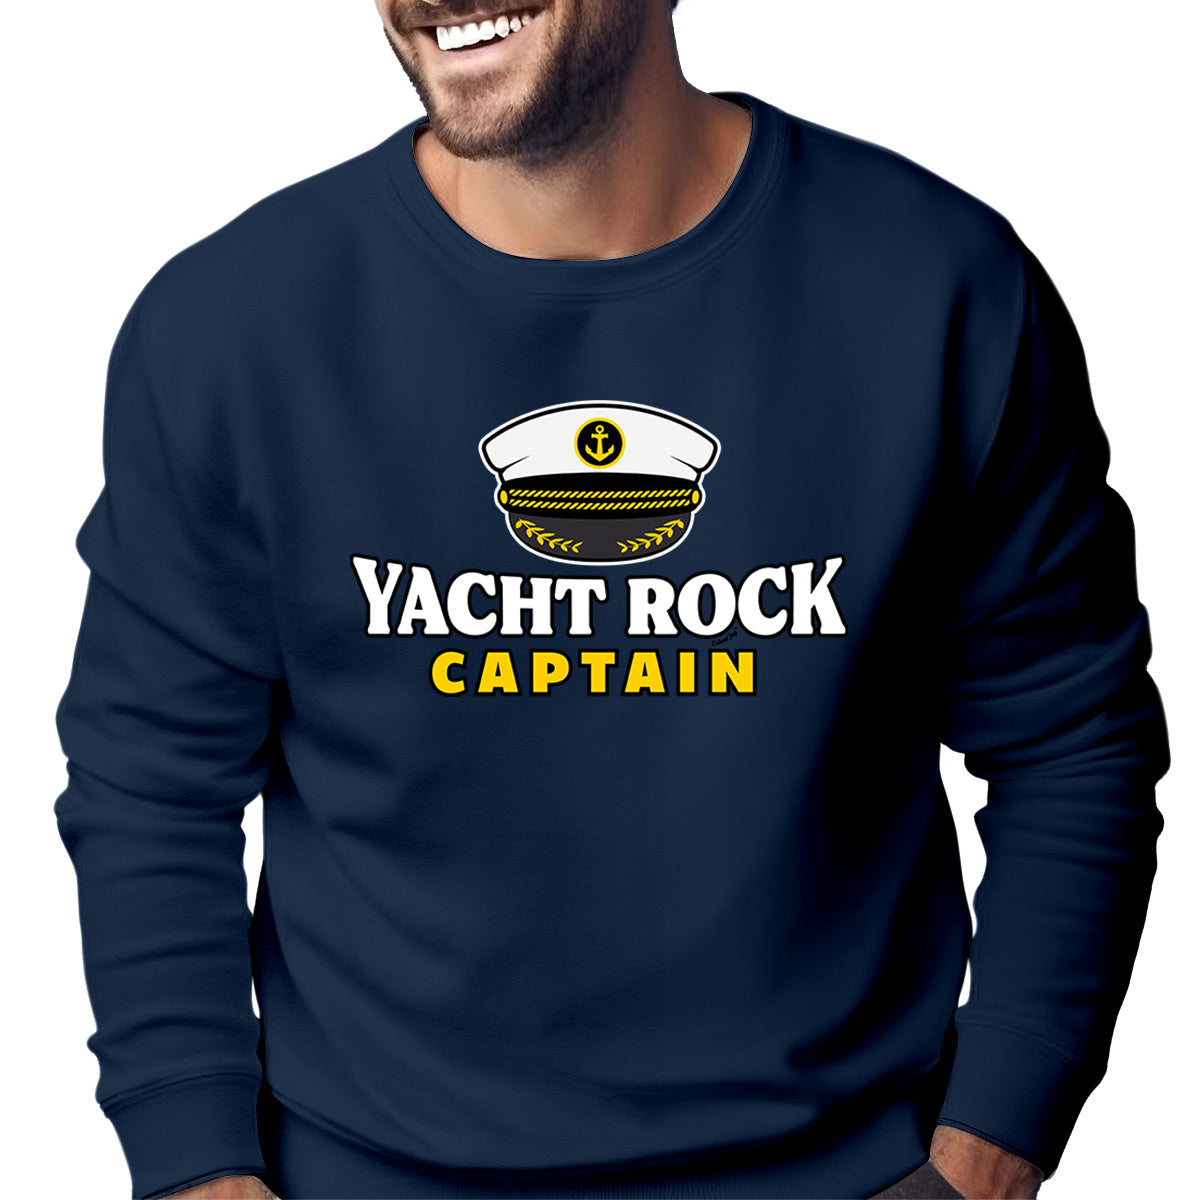 Yach Rock Captain warn sweatshirt Model Wearing Navy Sweatshirt